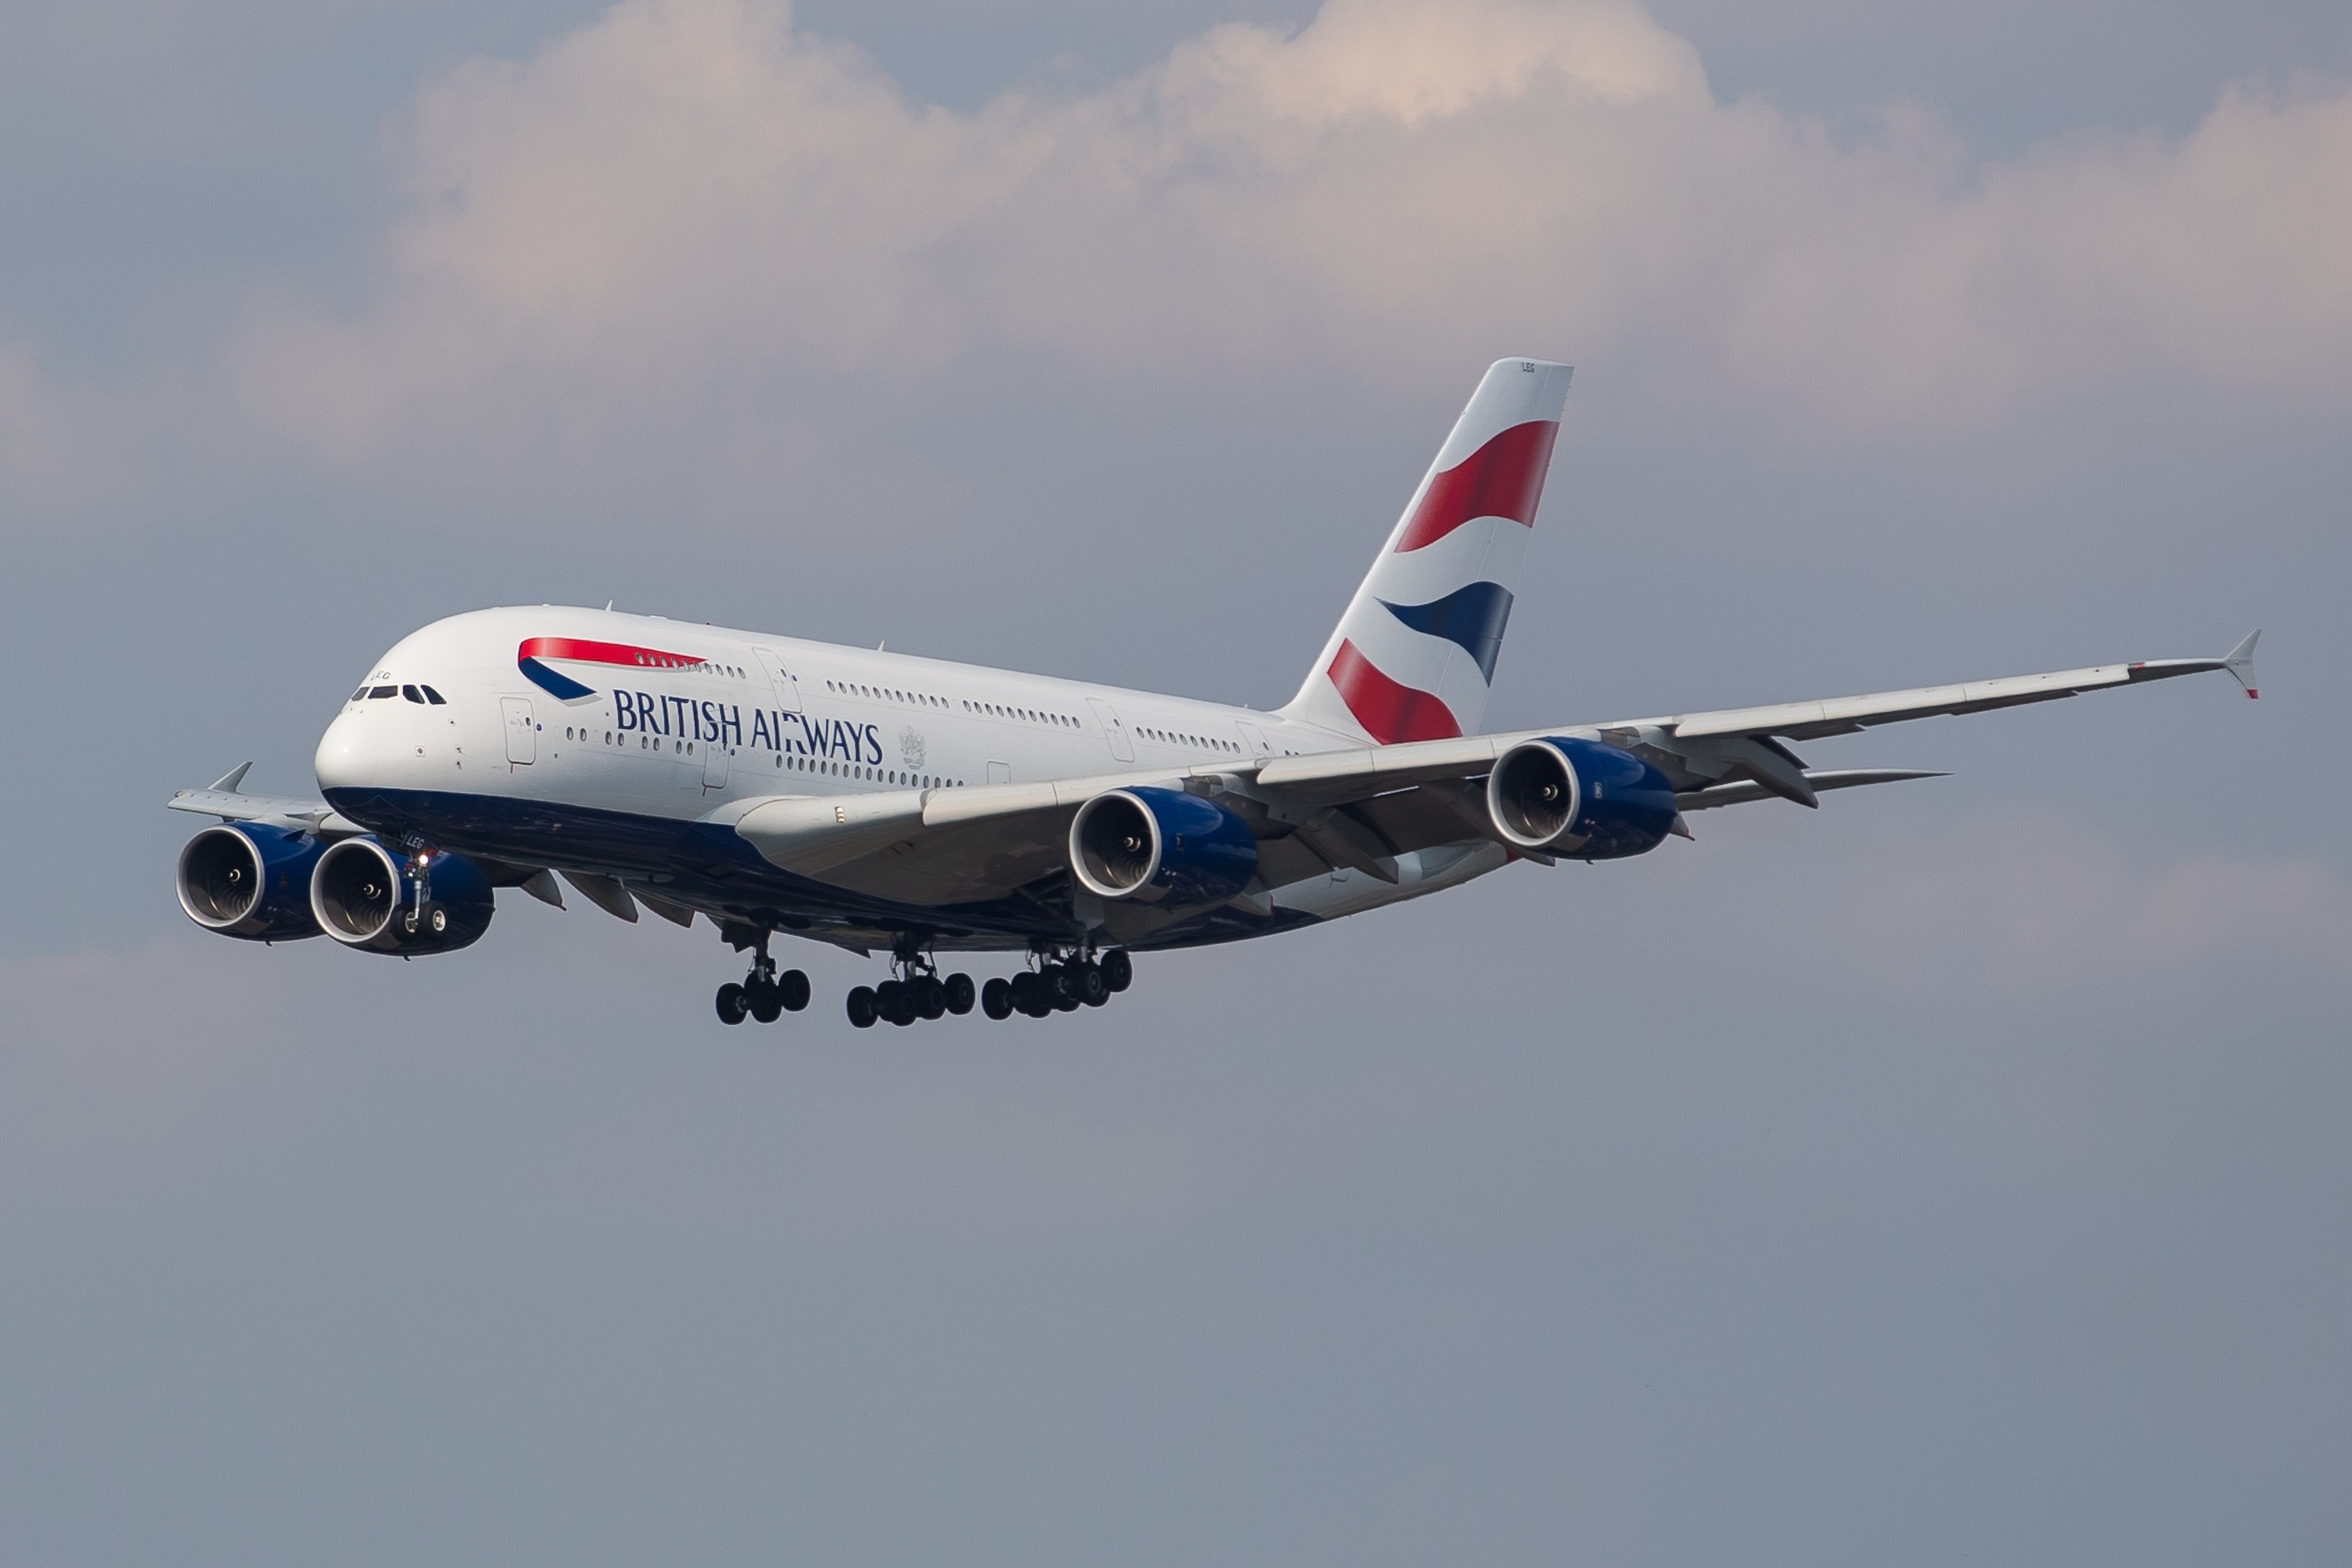 British Airways A380 landing at ORD